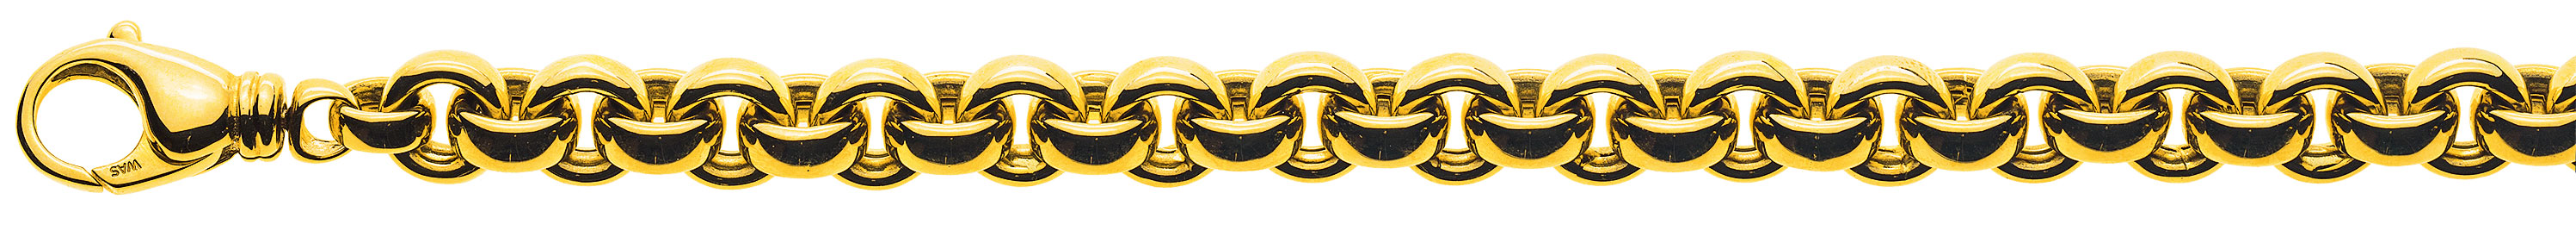 AURONOS Prestige Necklace yellow gold 18K handmade pea chain 45cm 9.5mm